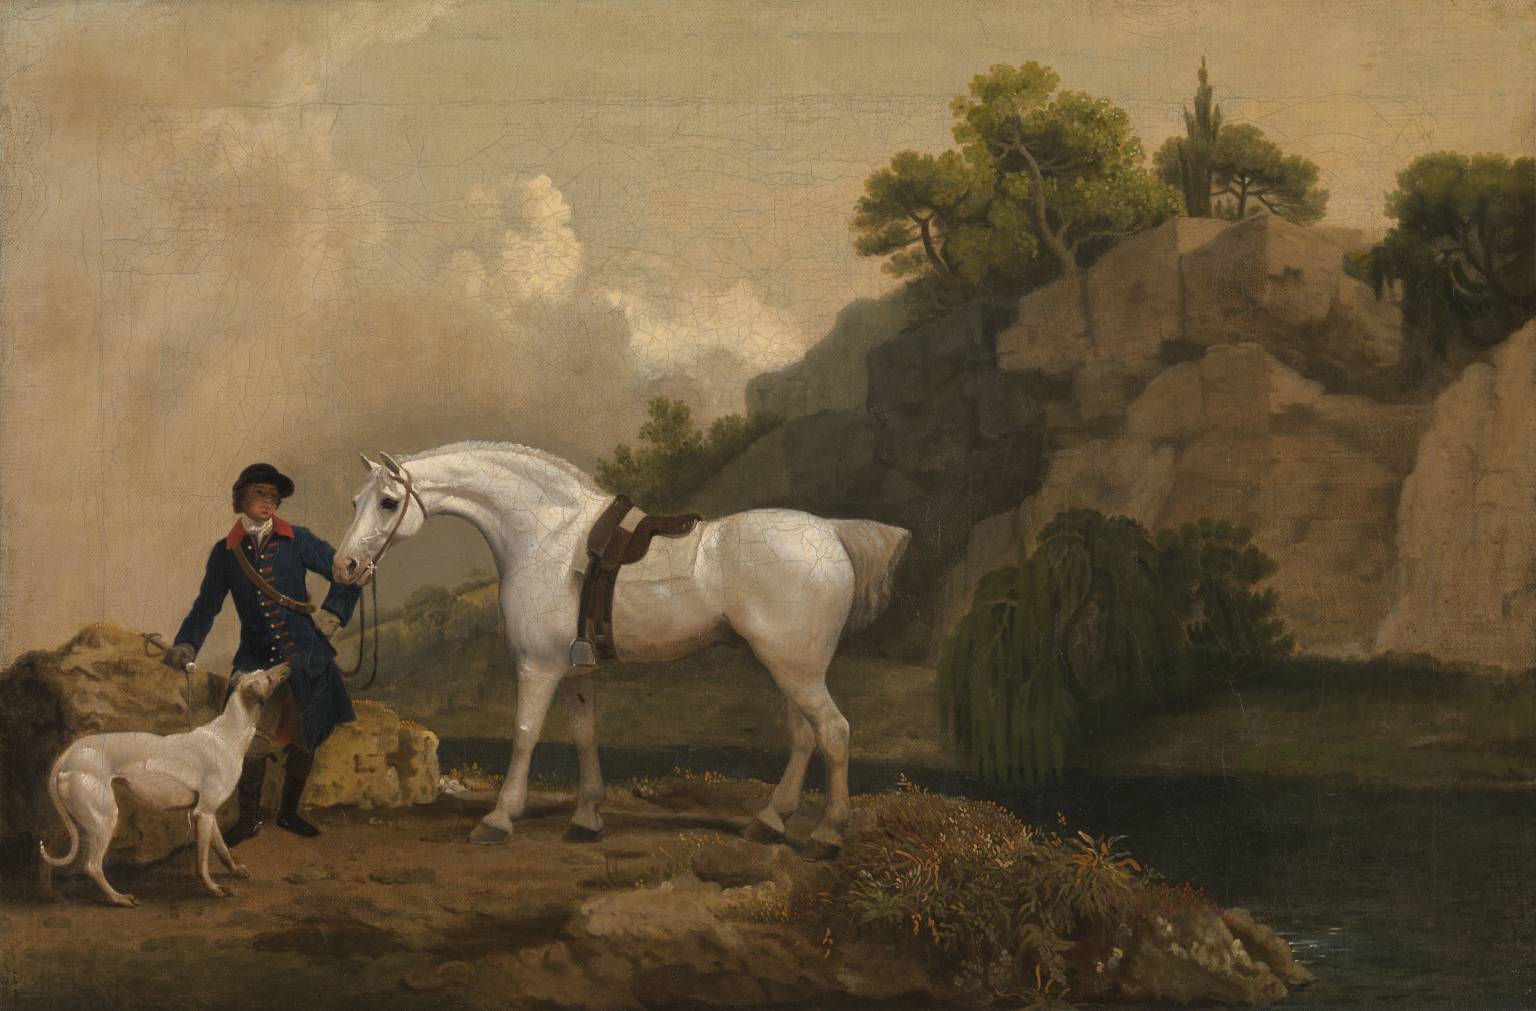 Лошади 18 века. Джордж Стаббс лошади. Джордж Стаббс художник. Джордж Стаббс пейзаж 18 век. «Лев, нападающий на лошадь», Джордж Стаббс, (1762)..